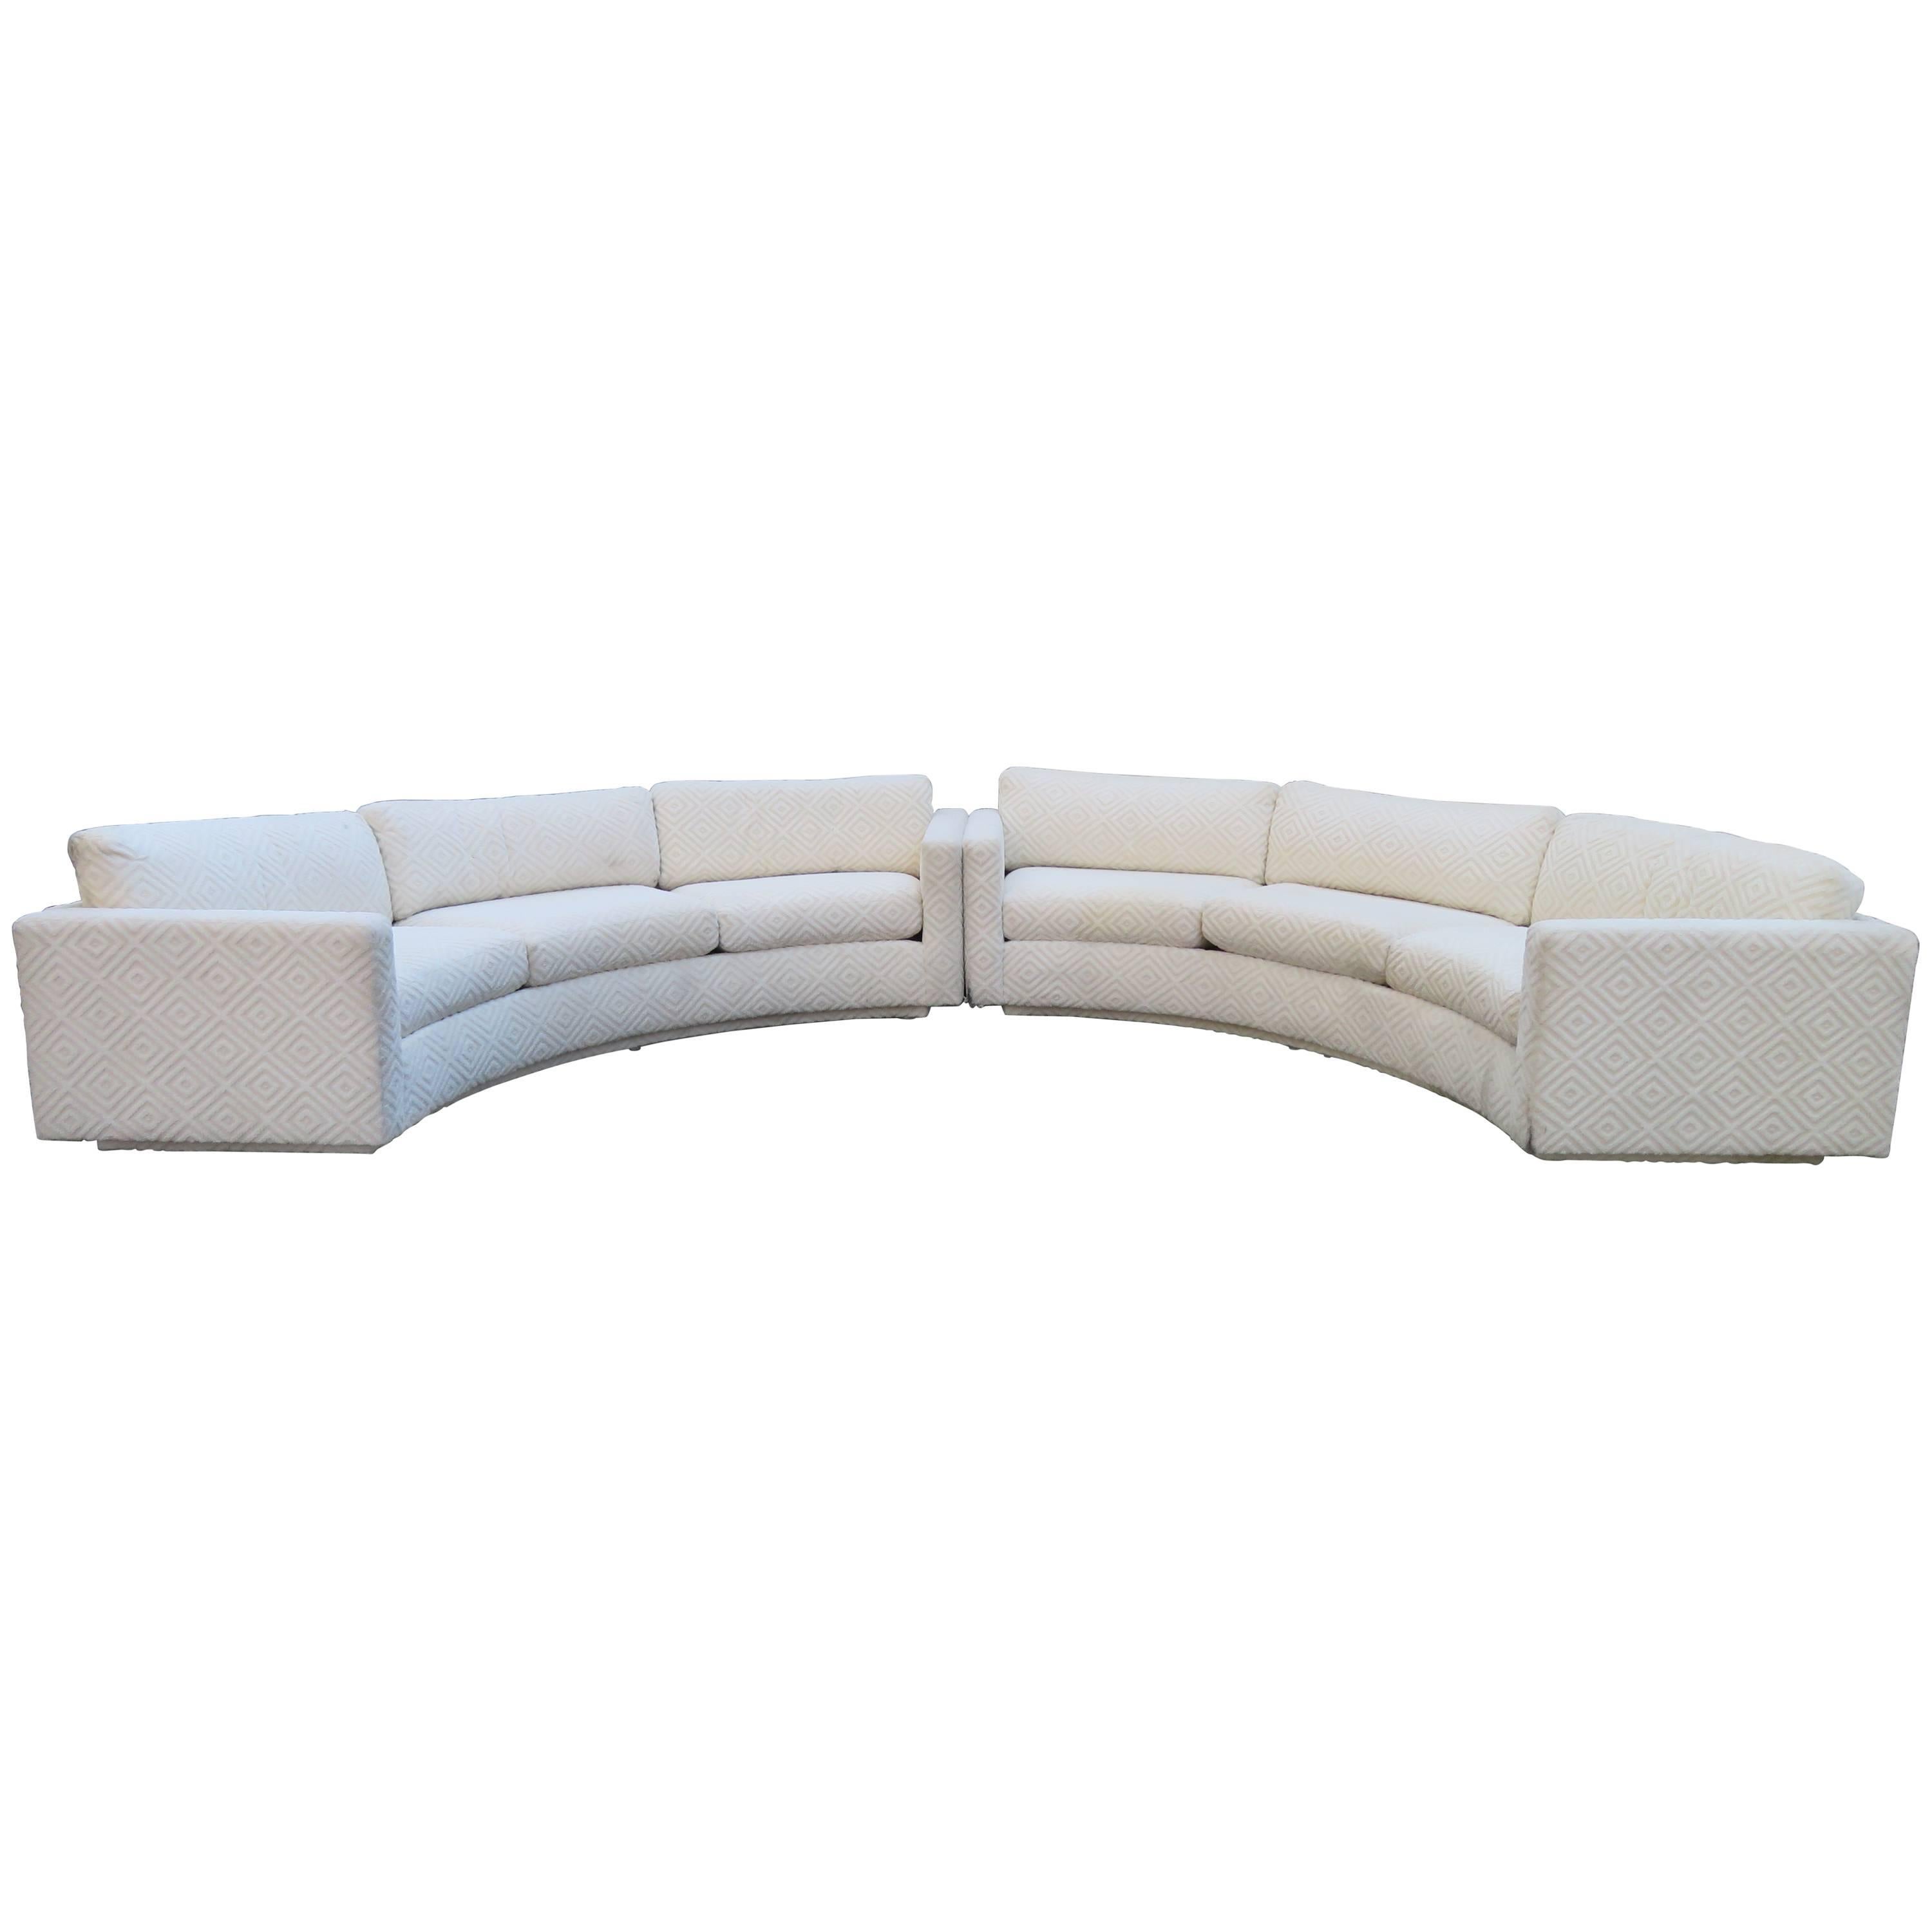 Fabulous Two-Piece Milo Baughman Circular Sectional Sofa, Mid-Century Curved